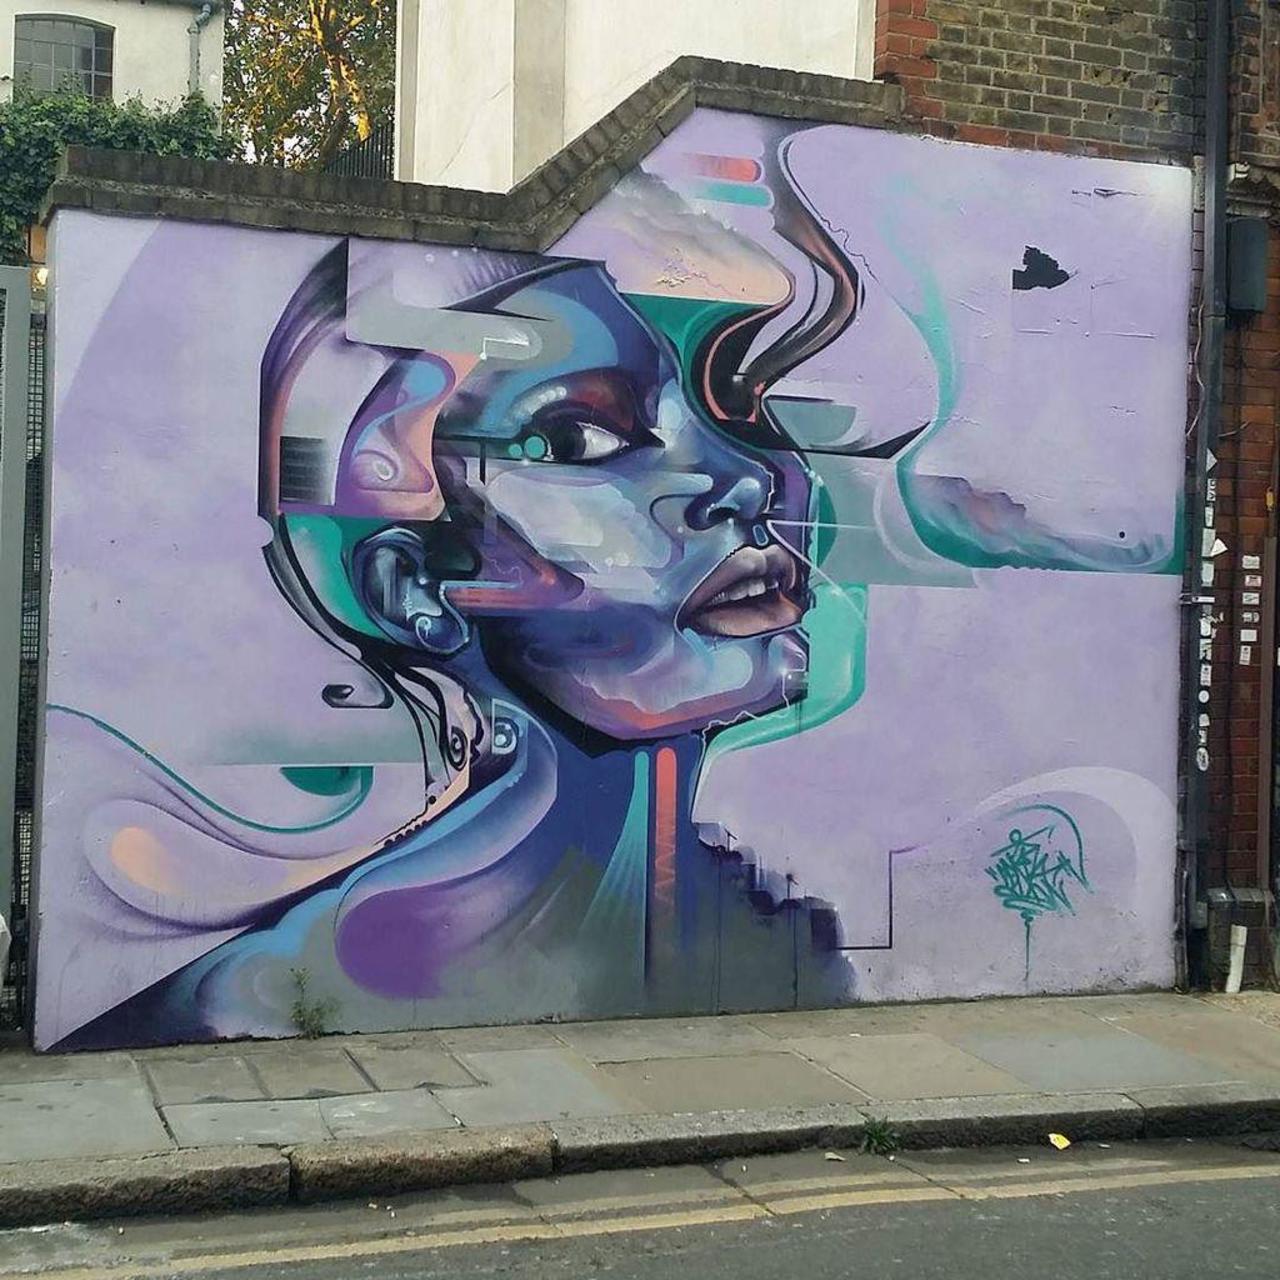 RT @artpushr: via #iamambrozine "http://bit.ly/1VHx7rM" #graffiti #streetart http://t.co/VLzdiUJ1C7